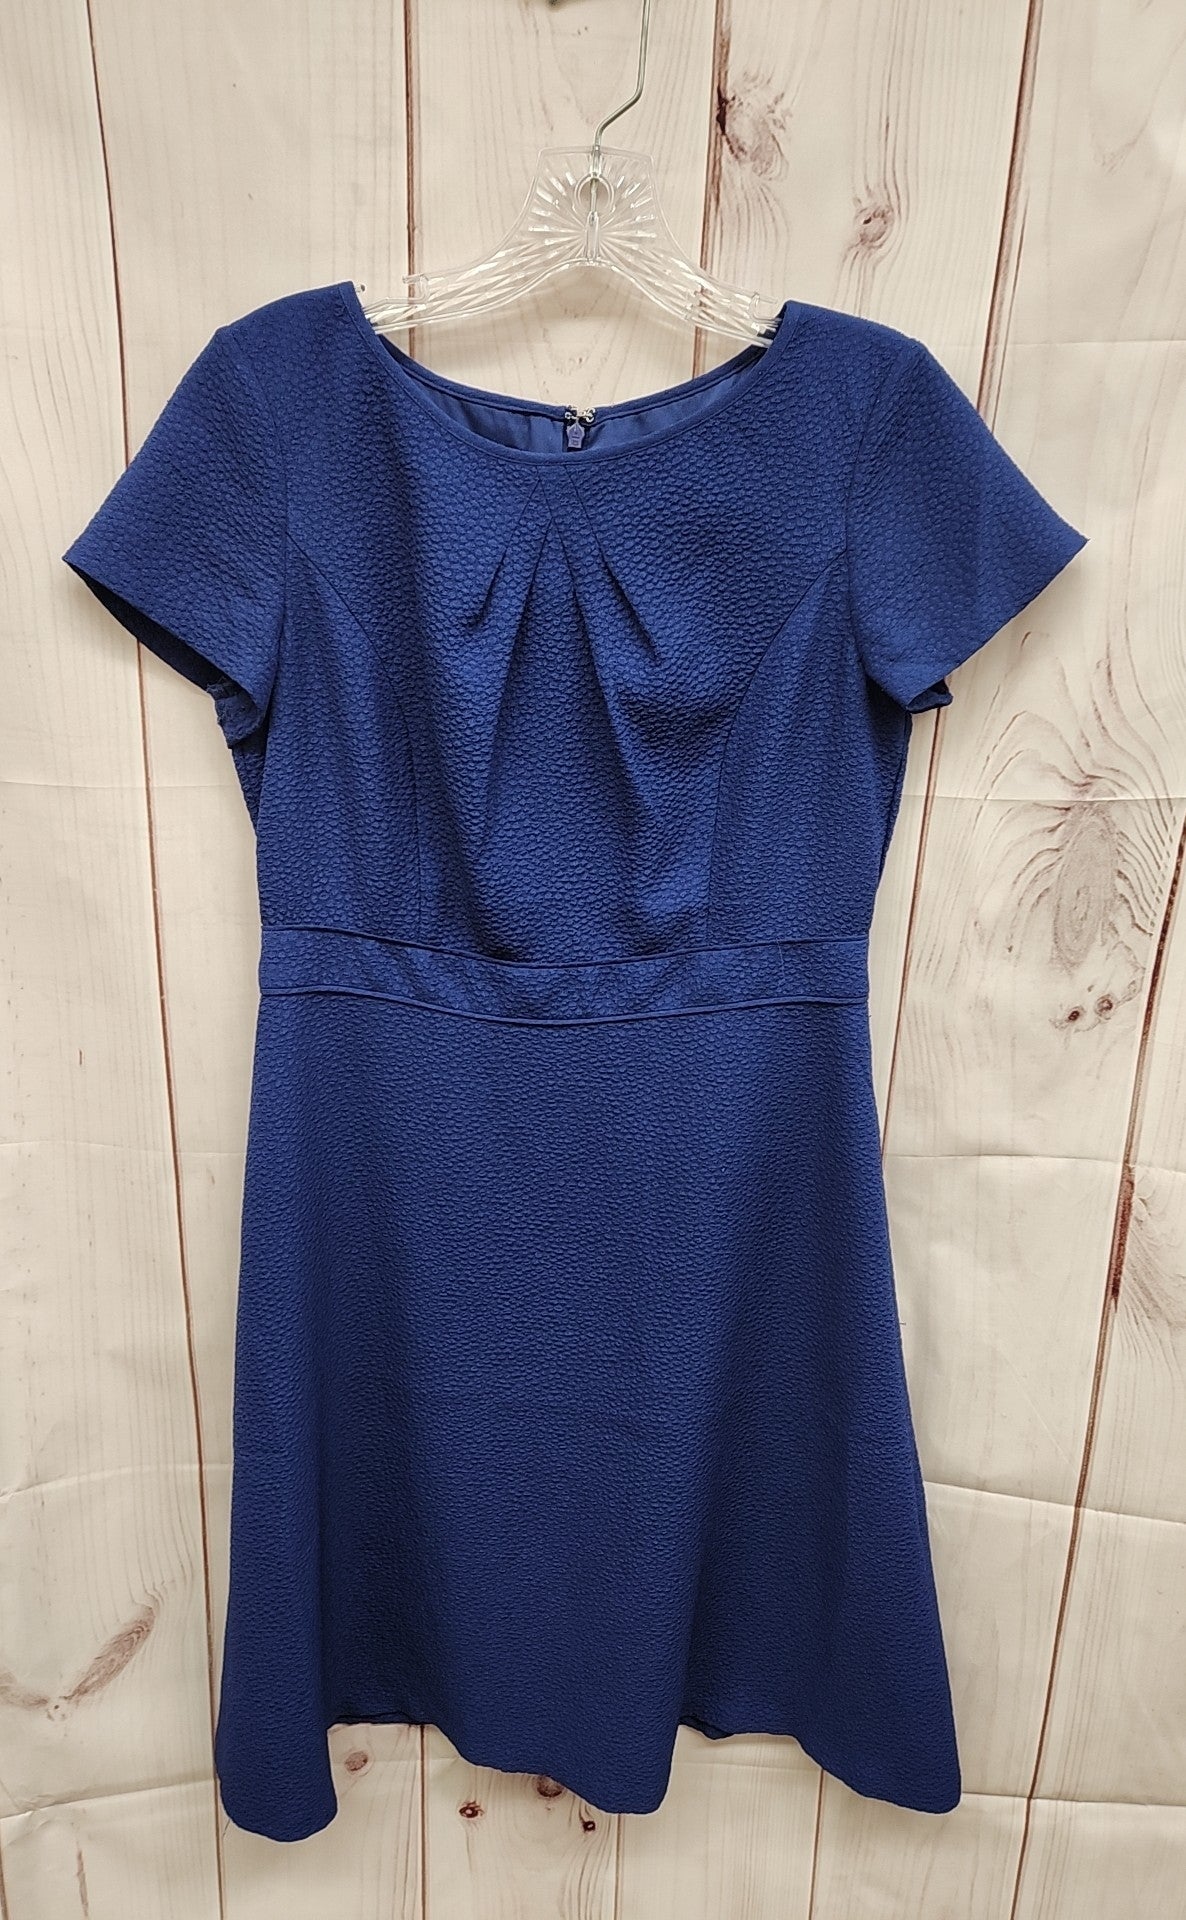 Talbots Women's Size 4 Petite Blue Dress